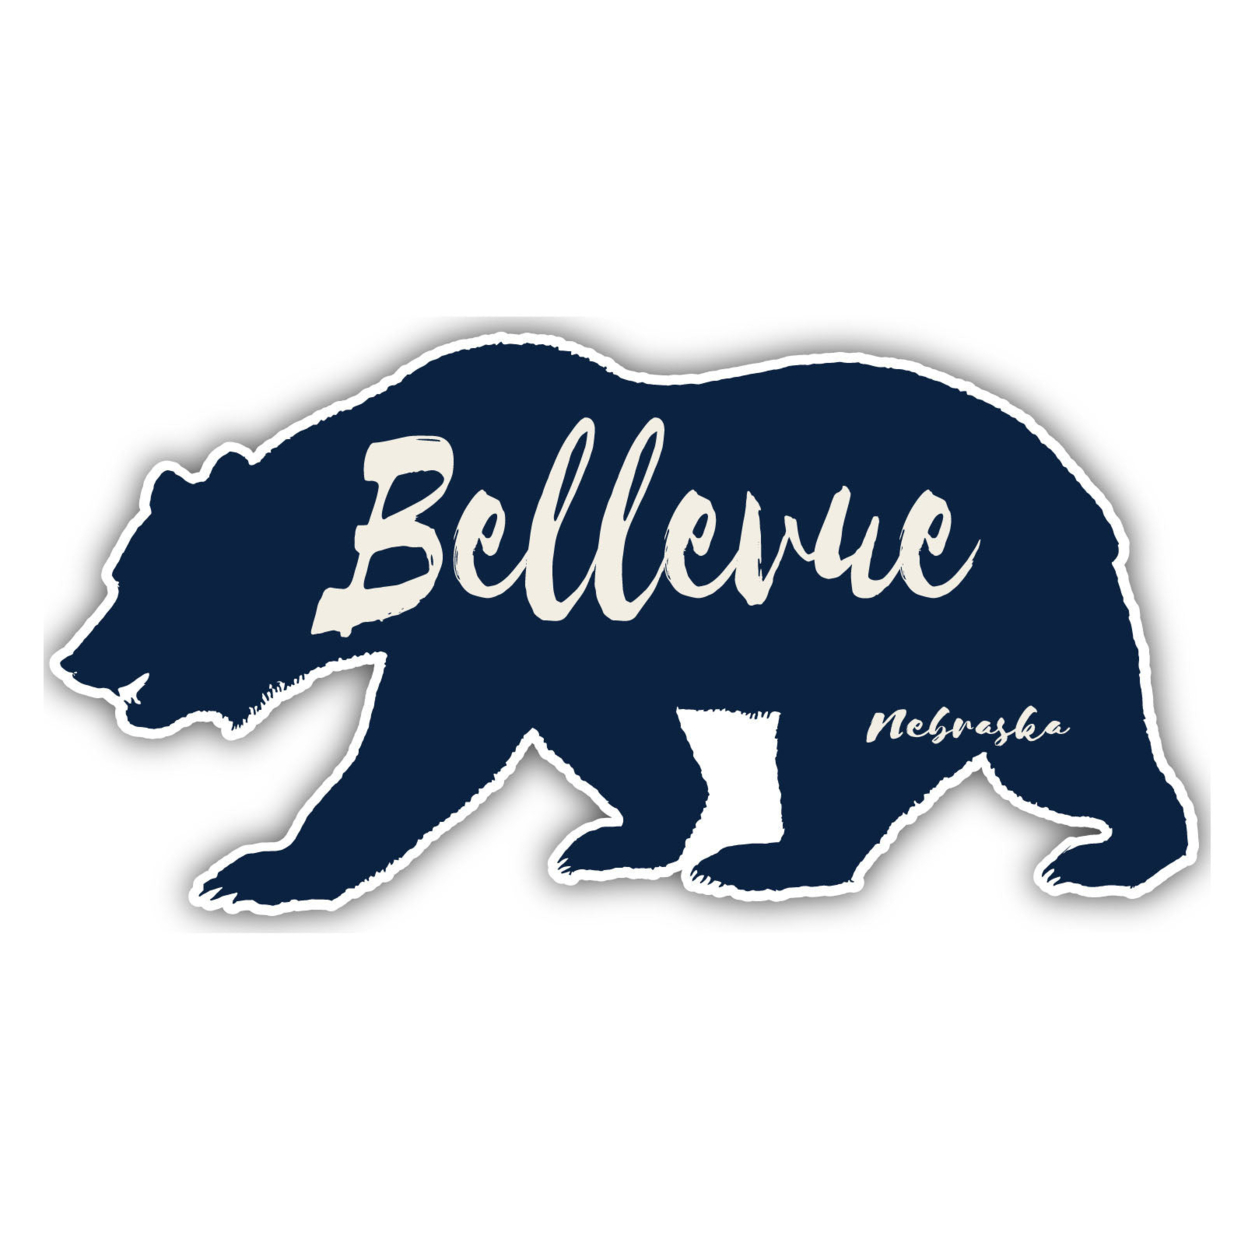 Bellevue Nebraska Souvenir Decorative Stickers (Choose Theme And Size) - Single Unit, 8-Inch, Great Outdoors